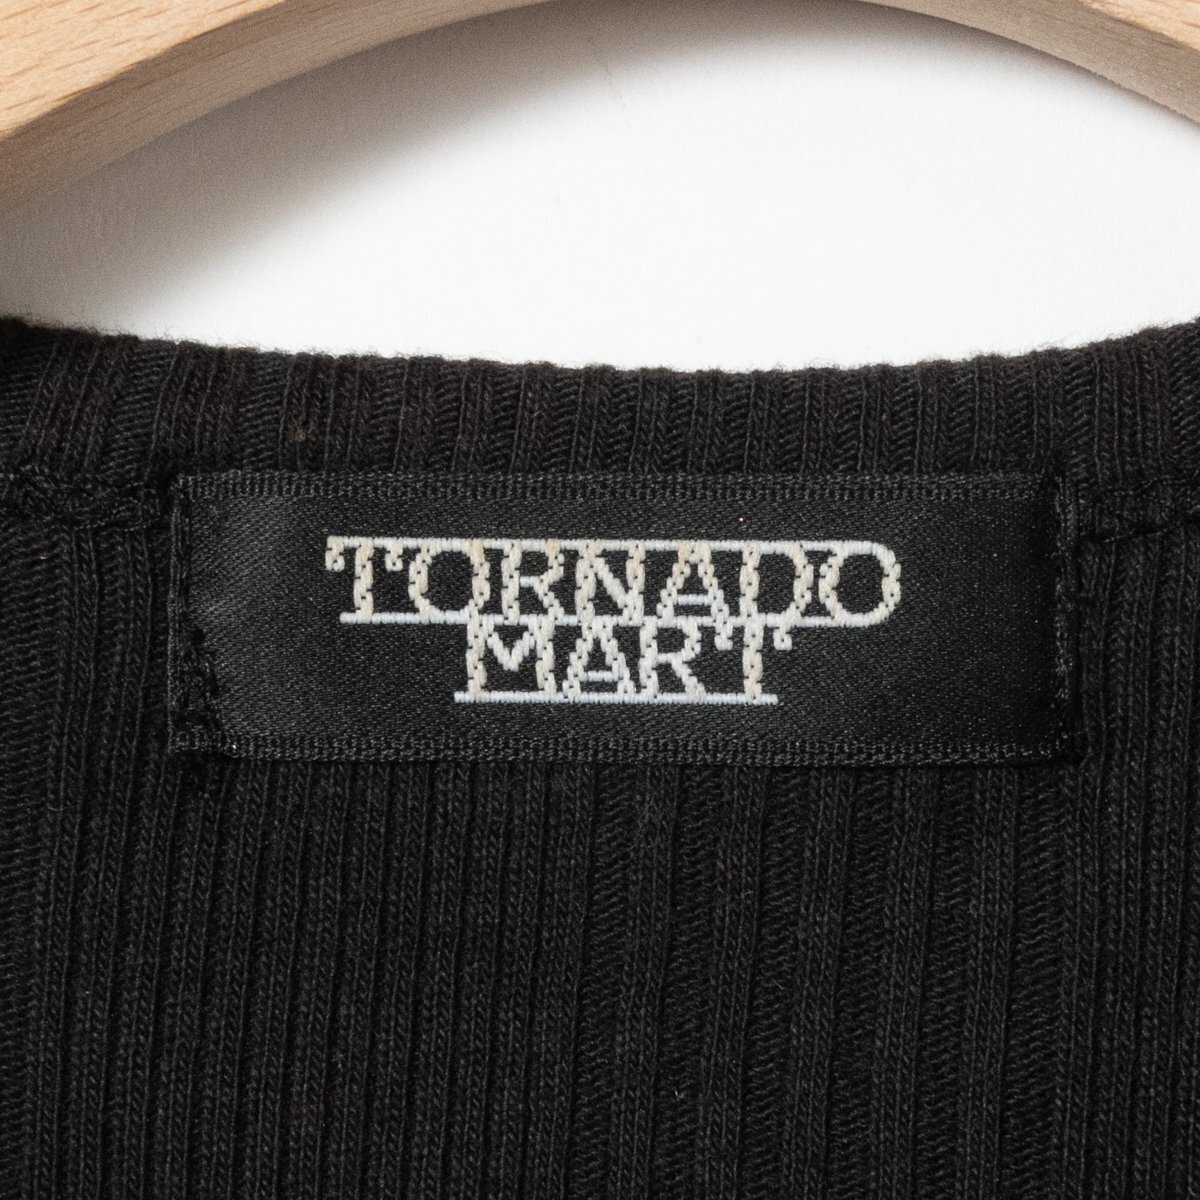  mail service 0 TORNADO MART Tornado Mart V neck T-shirt rib T-shirt short sleeves T-shirt black black cotton 100% cotton simple summer put on mawashi 